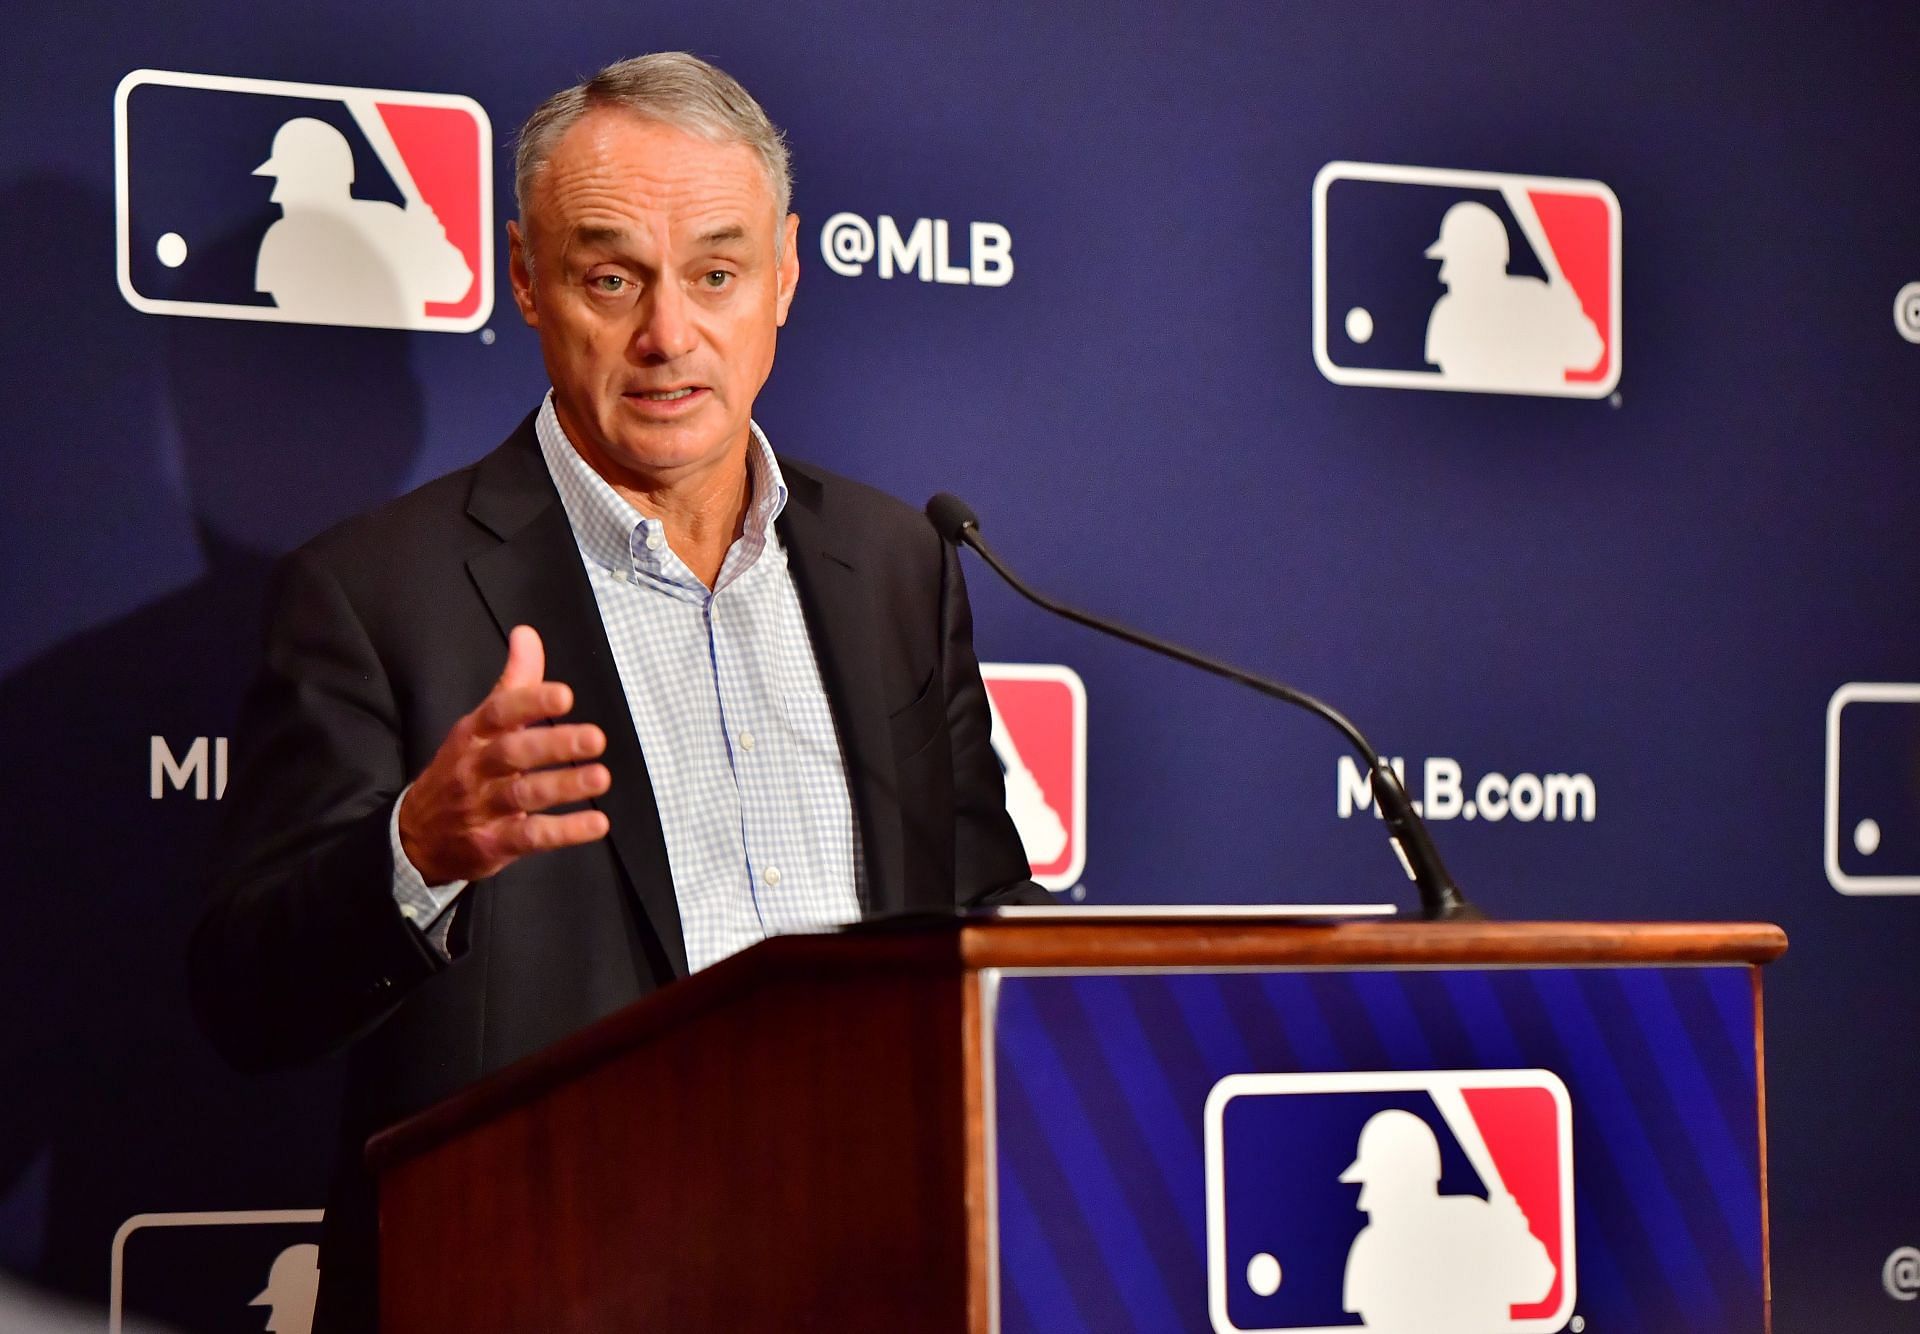 Bernardino: The Astros sign stealing scandal as a Yankees fan